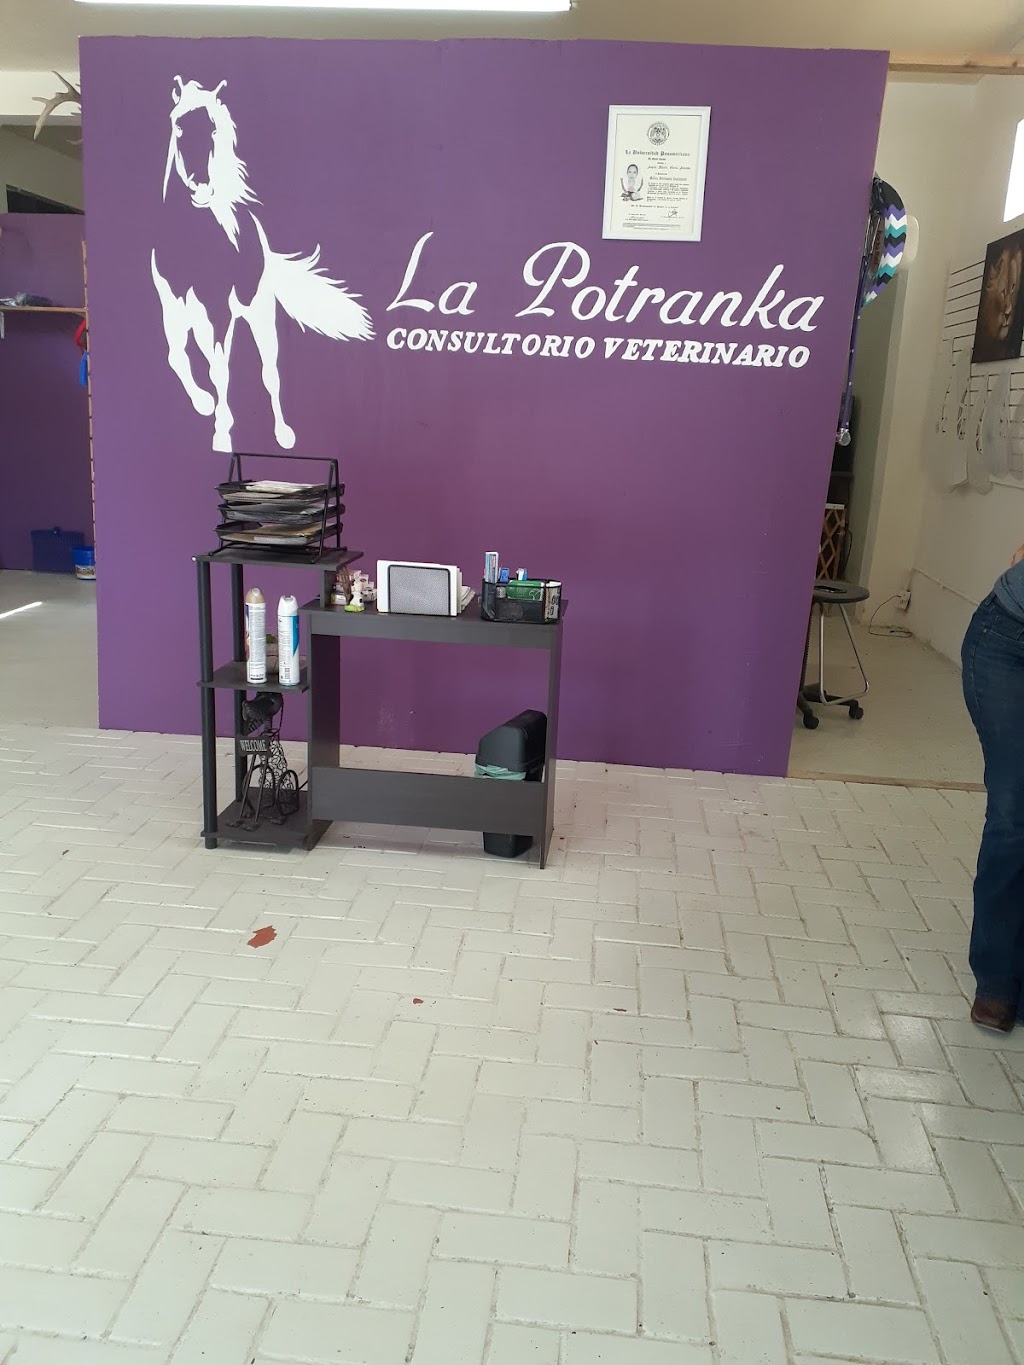 Veterinaria La Potranka - veterinary care  | Photo 2 of 4 | Address: C. Perú 1004, viveros, 88000 Nuevo Laredo, Tamps., Mexico | Phone: 867 242 6264